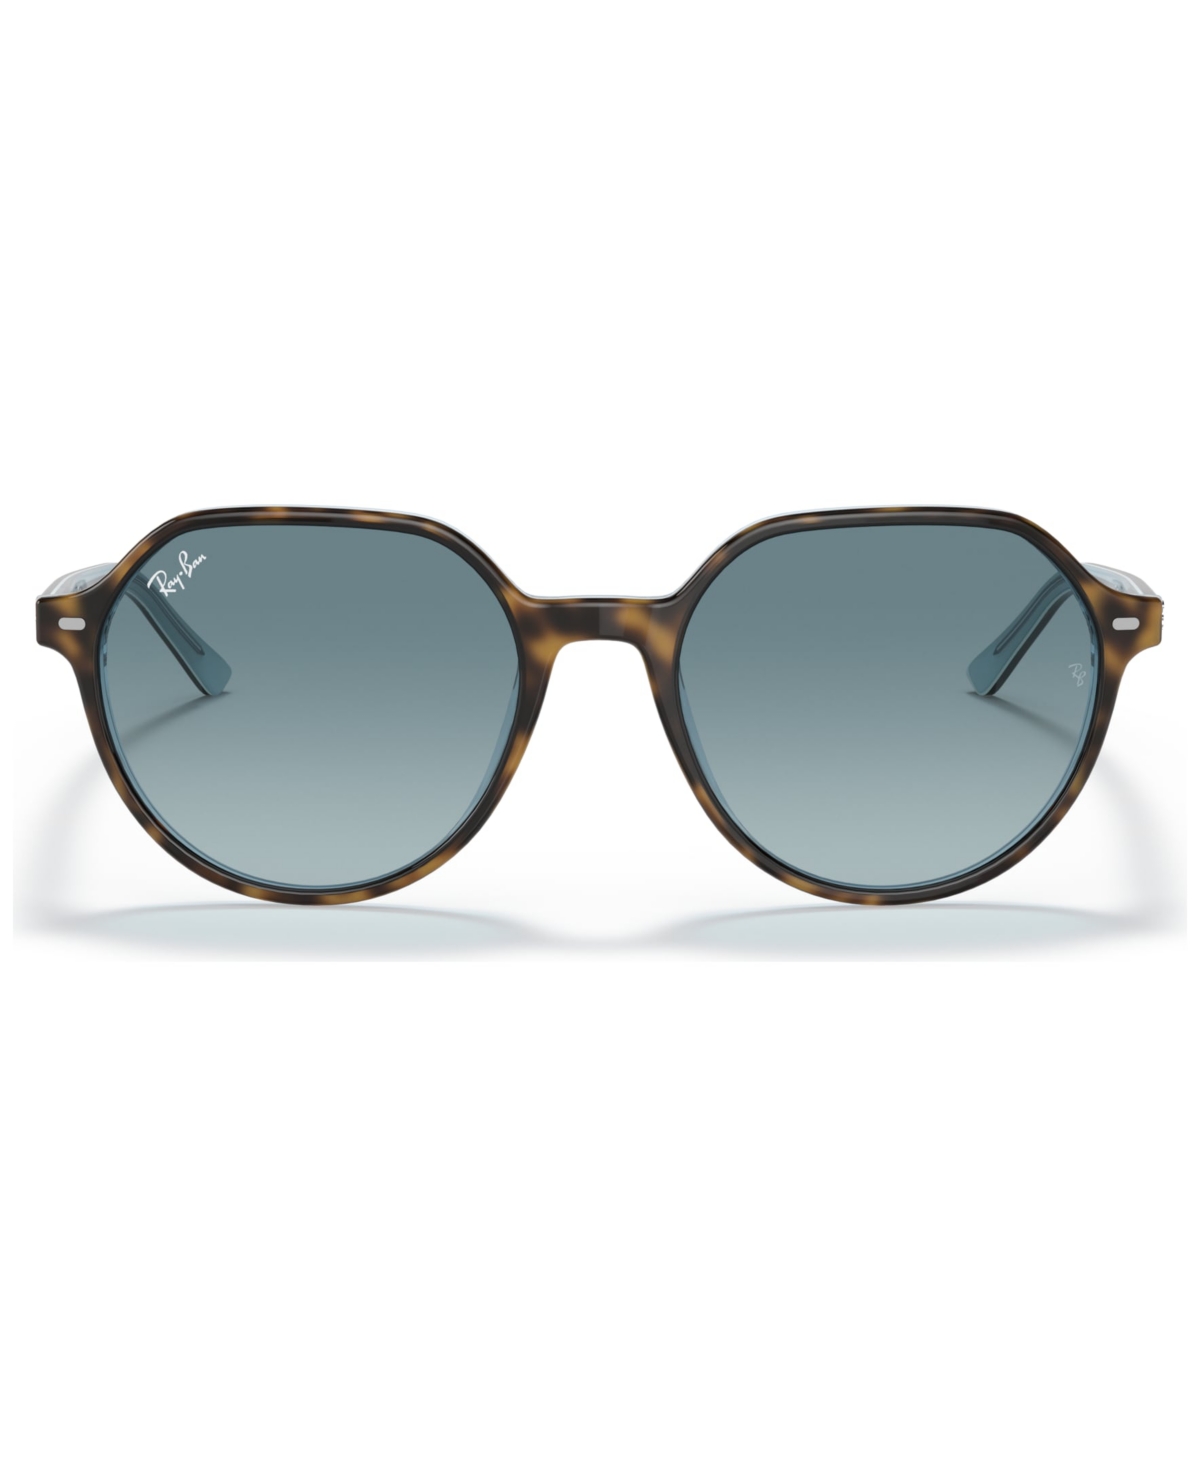 Ray Ban Thalia Sunglasses Tortoise Frame Grey Lenses 53-18